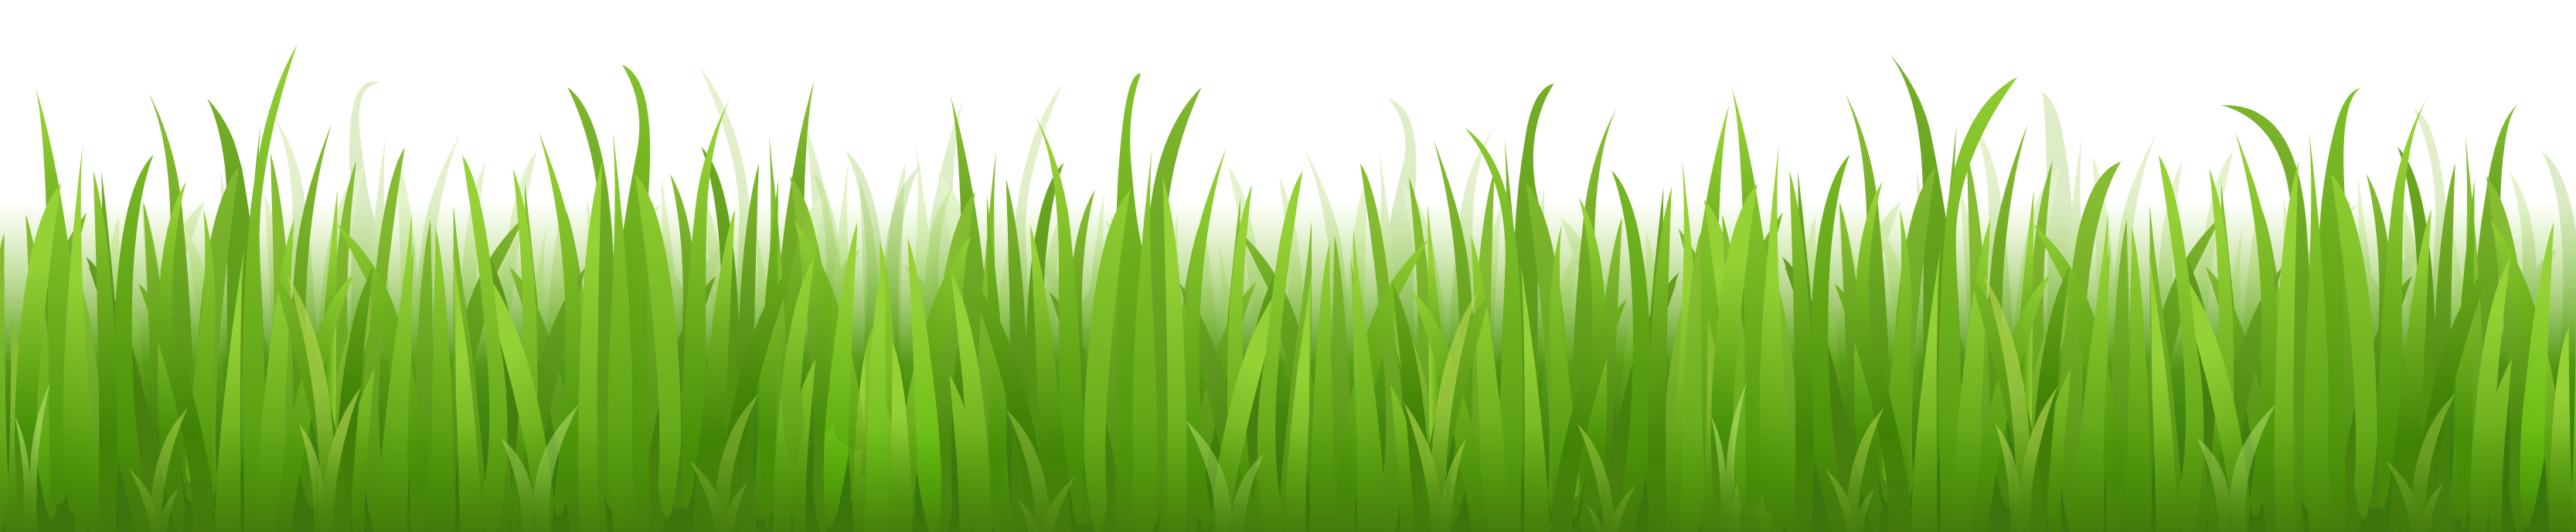 grass clipart row